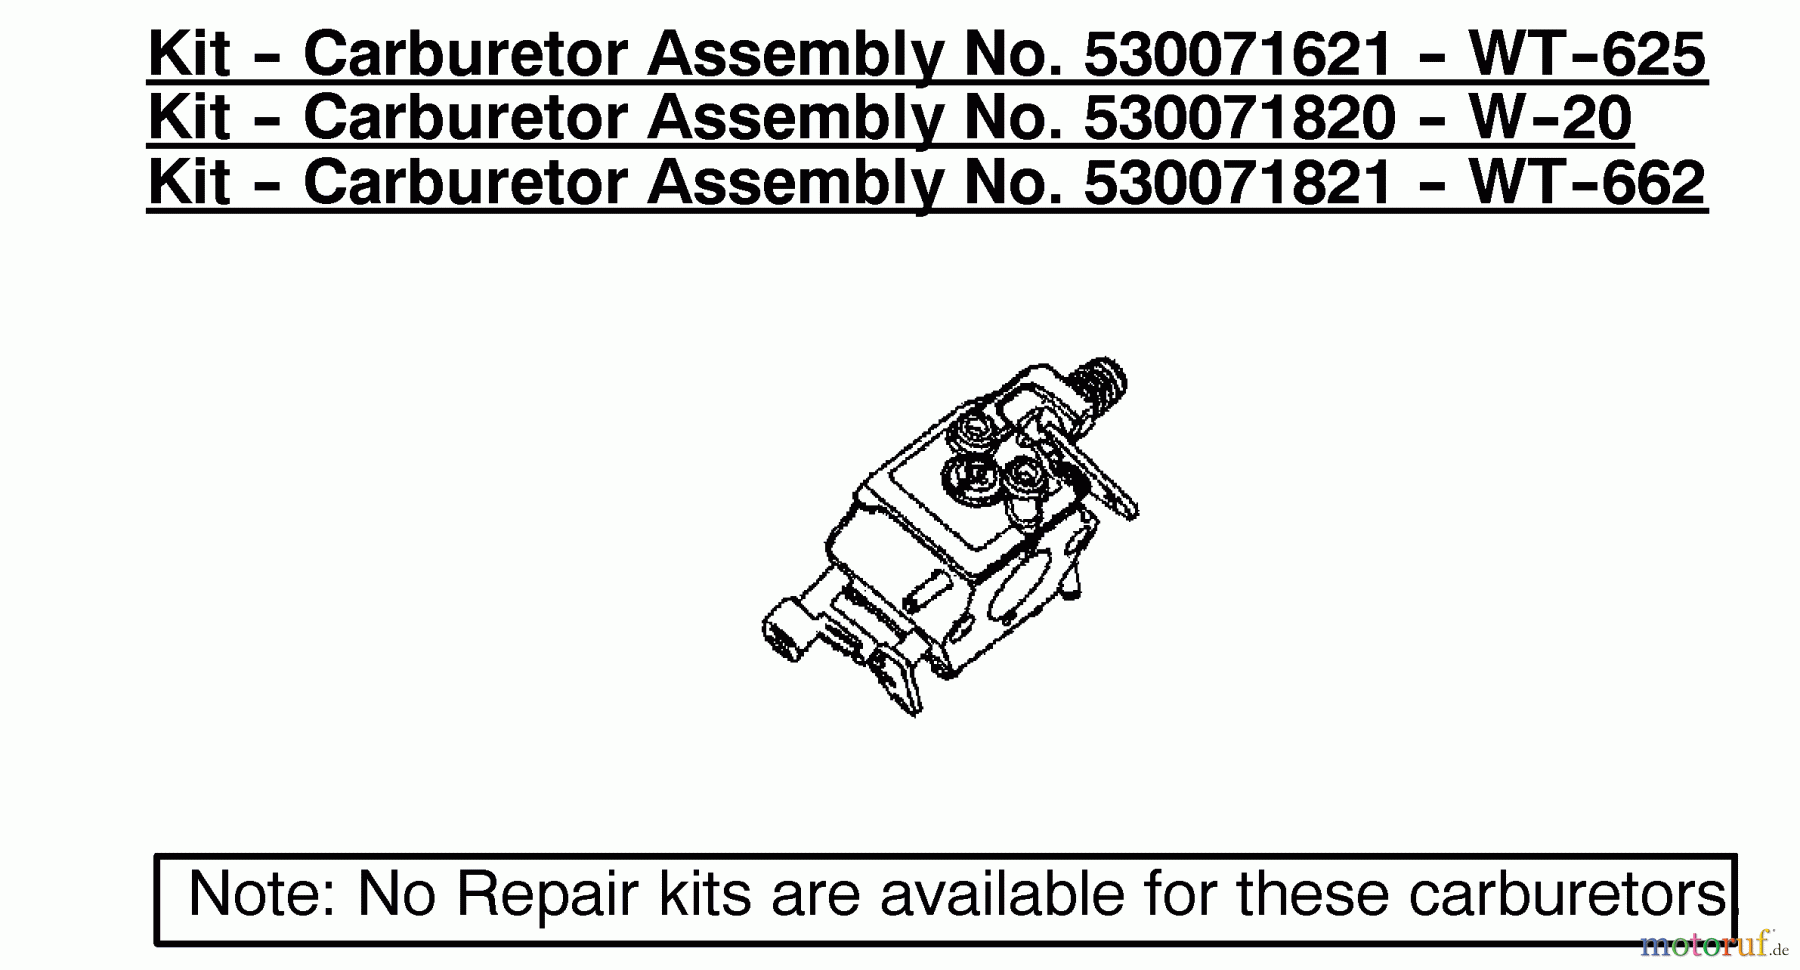  Poulan / Weed Eater Motorsägen 2450 (Type 1) - Poulan Woodmaster Chainsaw Kit - Carburetor Assembly 530071621/530071820/530071821